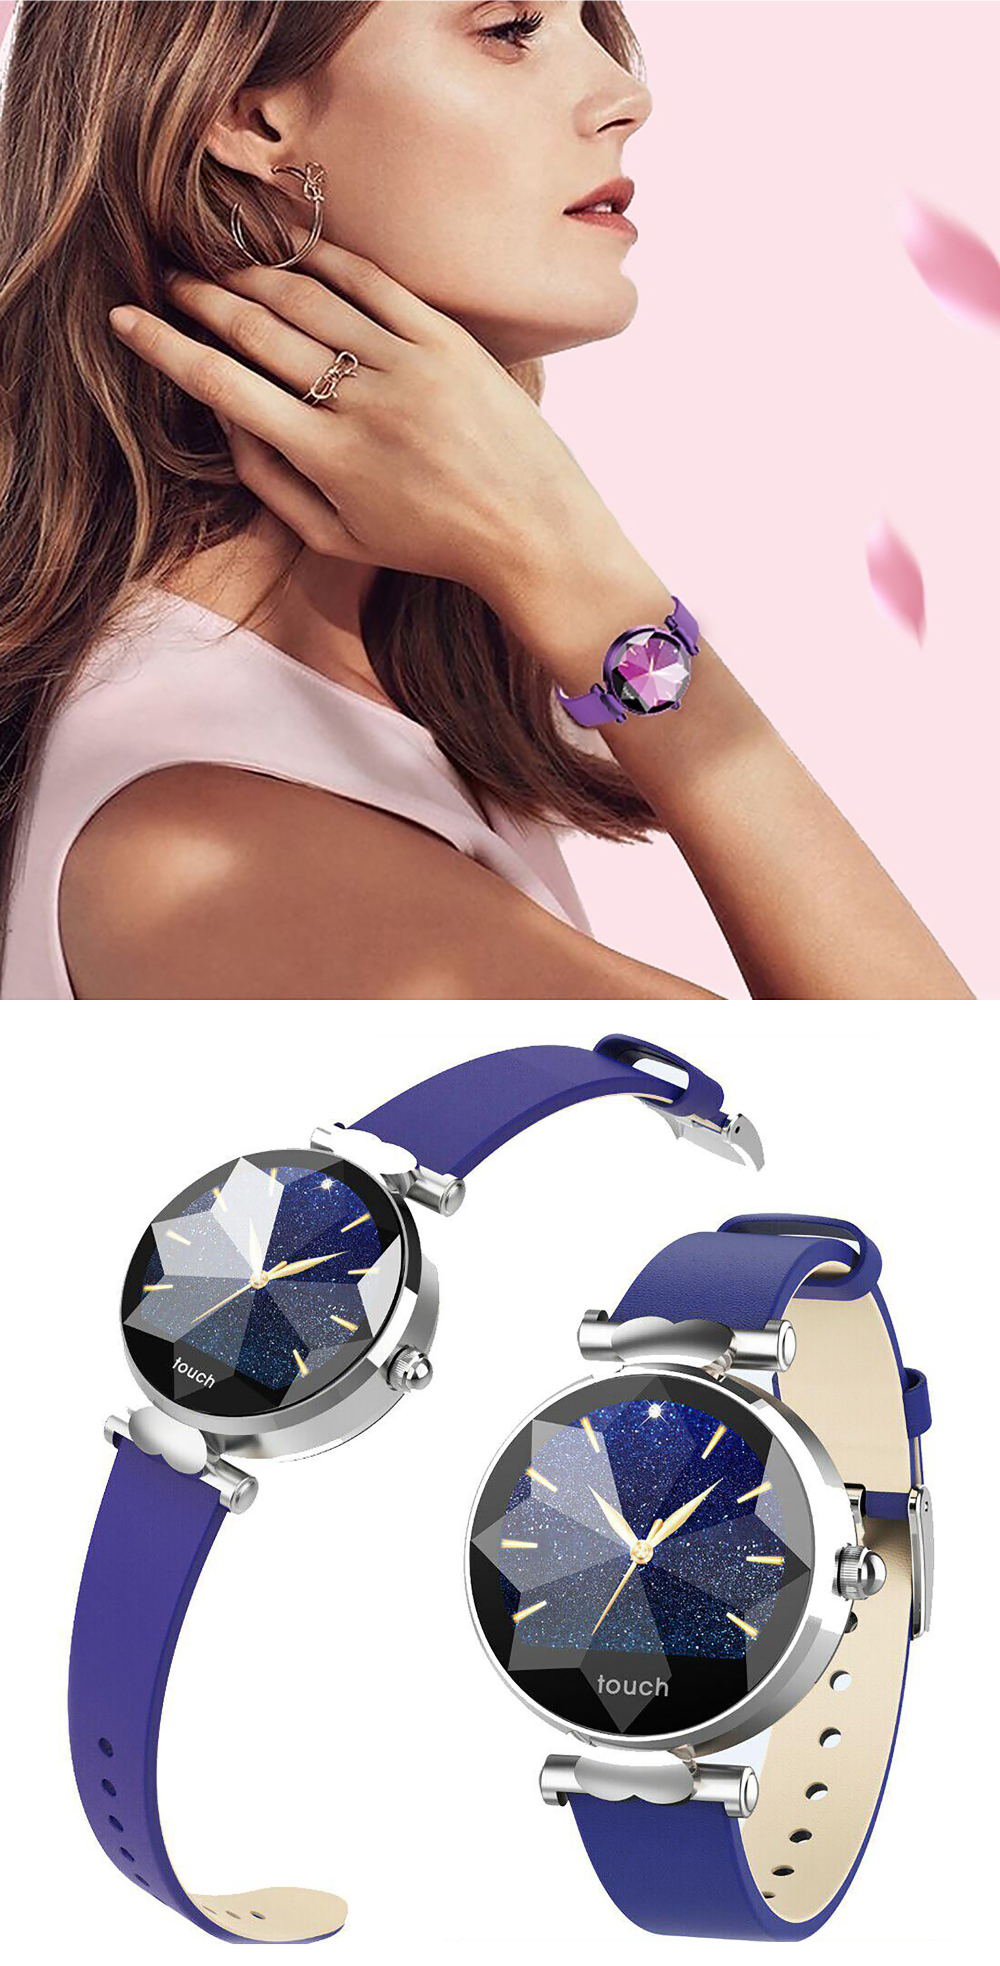 Ceas Smartwatch fitness fashion TKY-B80 Metal cu functie de monitorizare ritm cardiac, Tensiune arteriala, Monitorizare somn, Notificari Apel/ SMS, Auriu